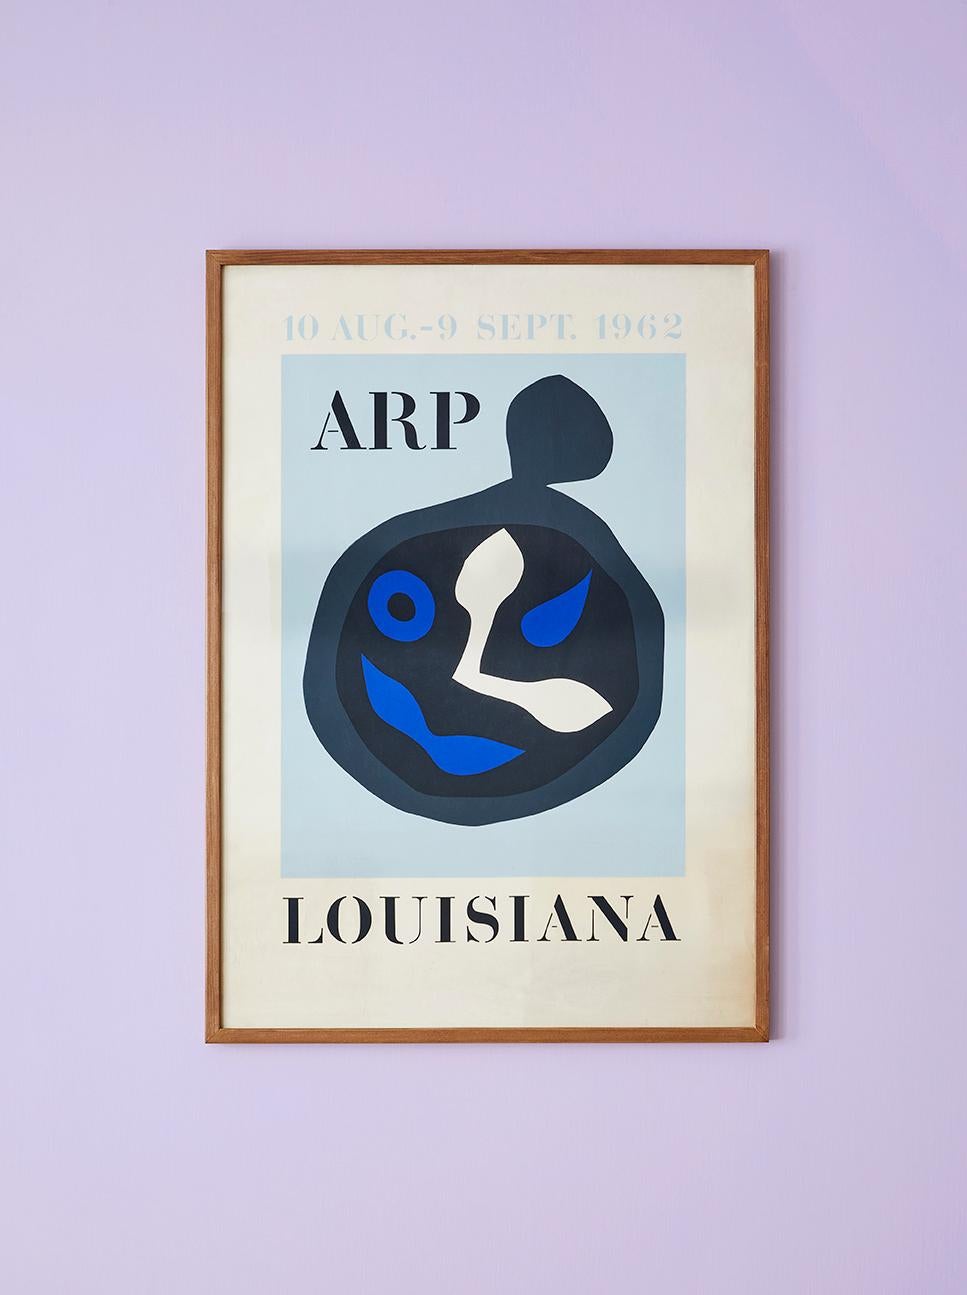 Jean Arp
Denmark, 1958

“Arp”. Louisiana Museum. Vintage exhibition poster. 

H 103 x W 73 x D 3 cm